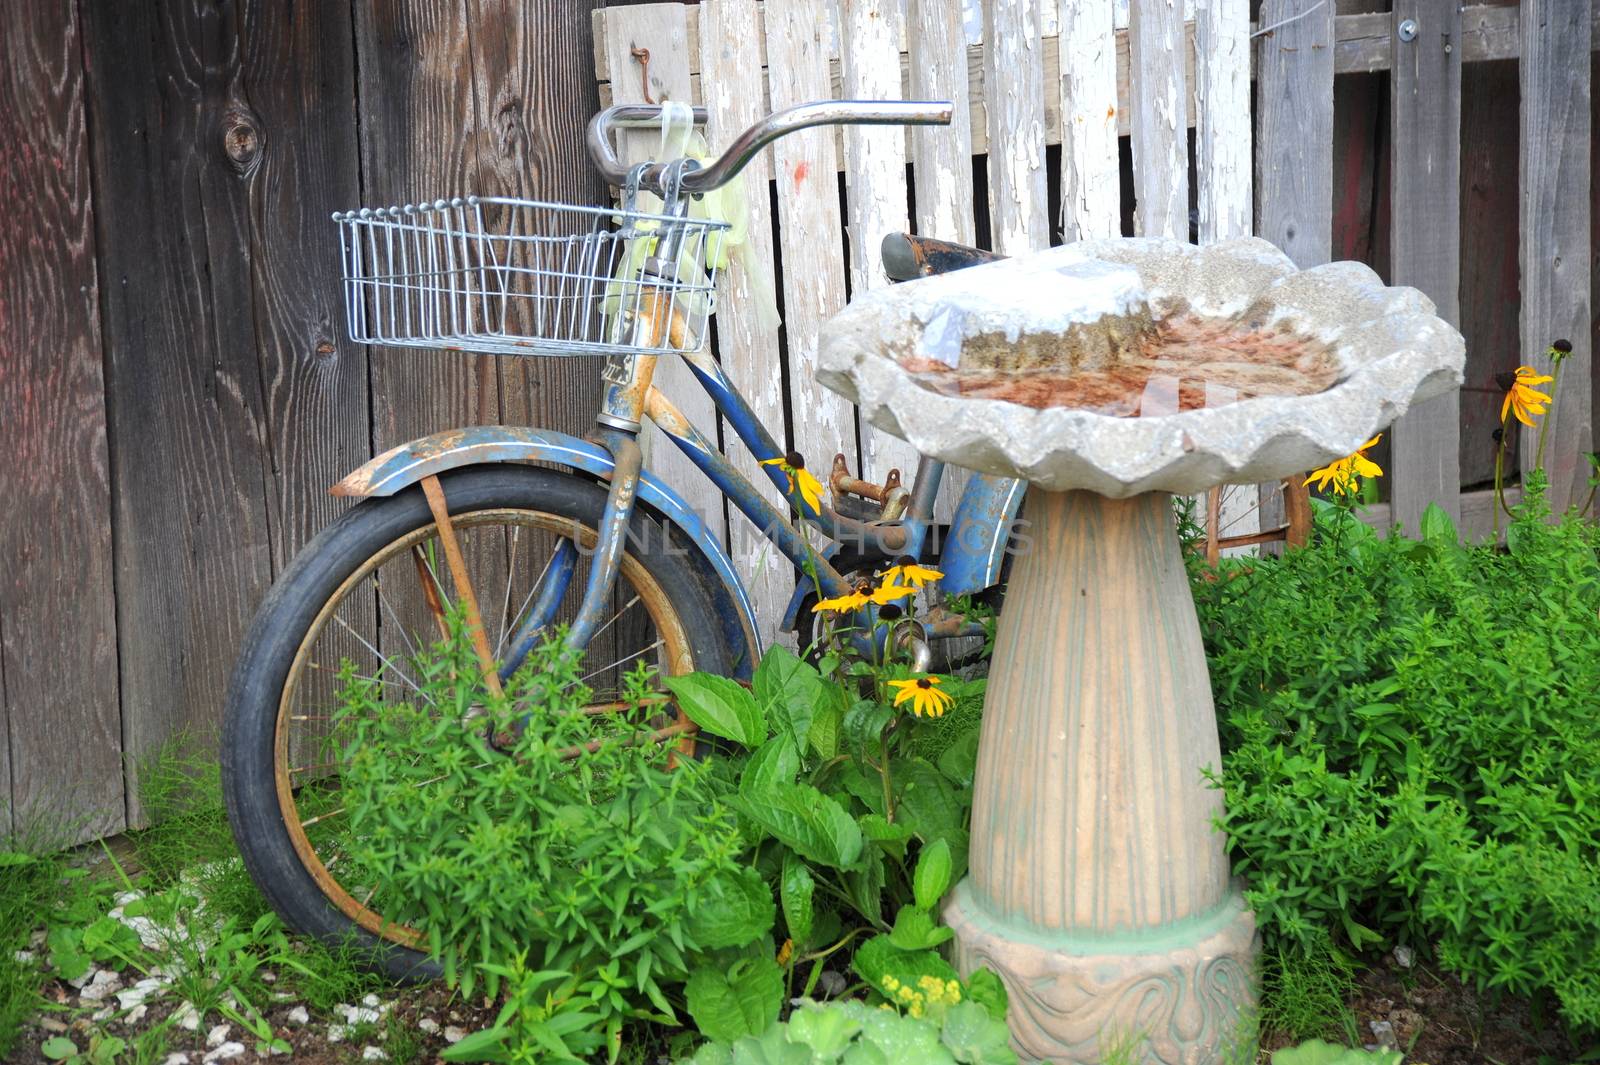 Vintage bike displayed against a wooden fence outside.